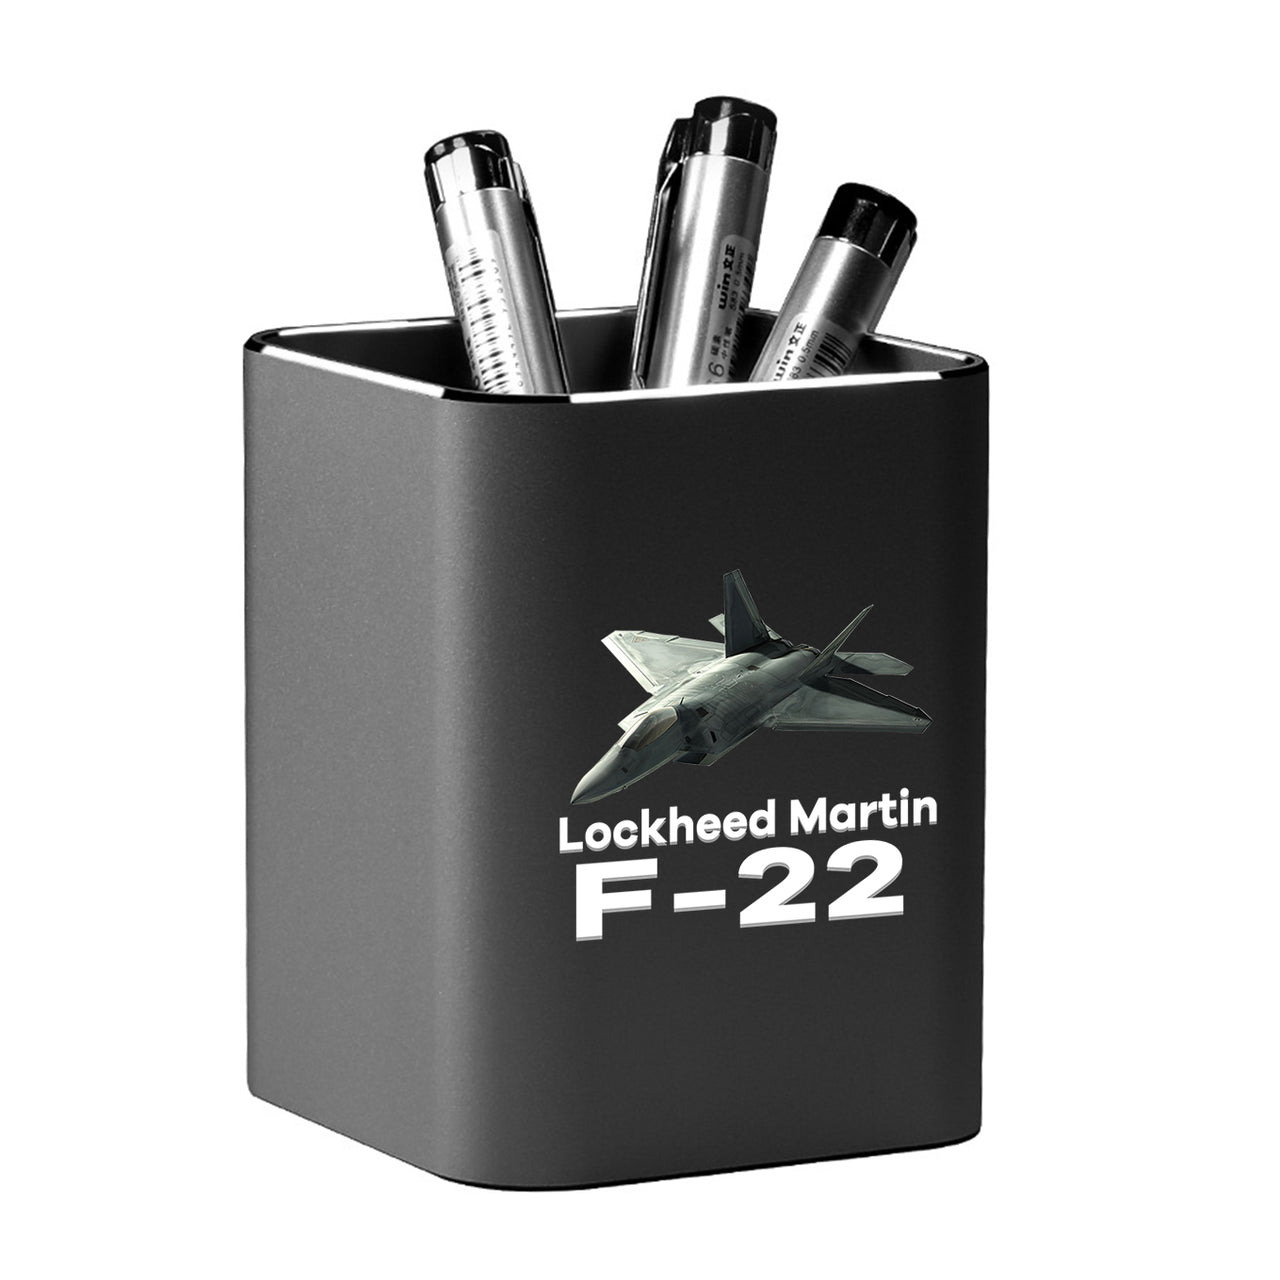 The Lockheed Martin F22 Designed Aluminium Alloy Pen Holders